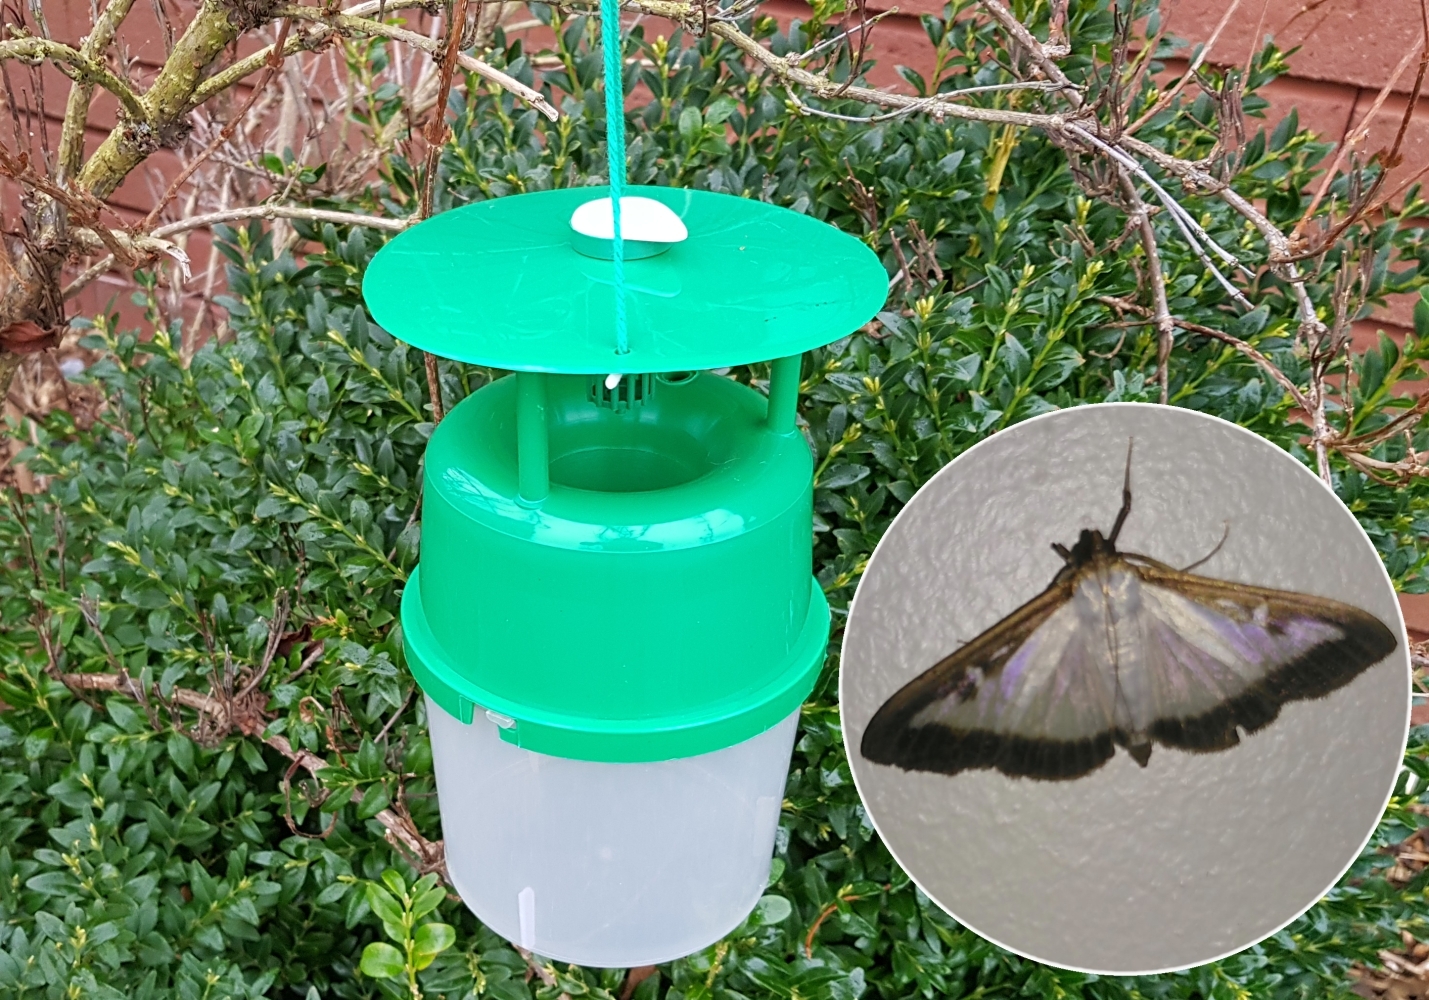 Setting Up A Box Moth Pheromone Trap – EBTS UK